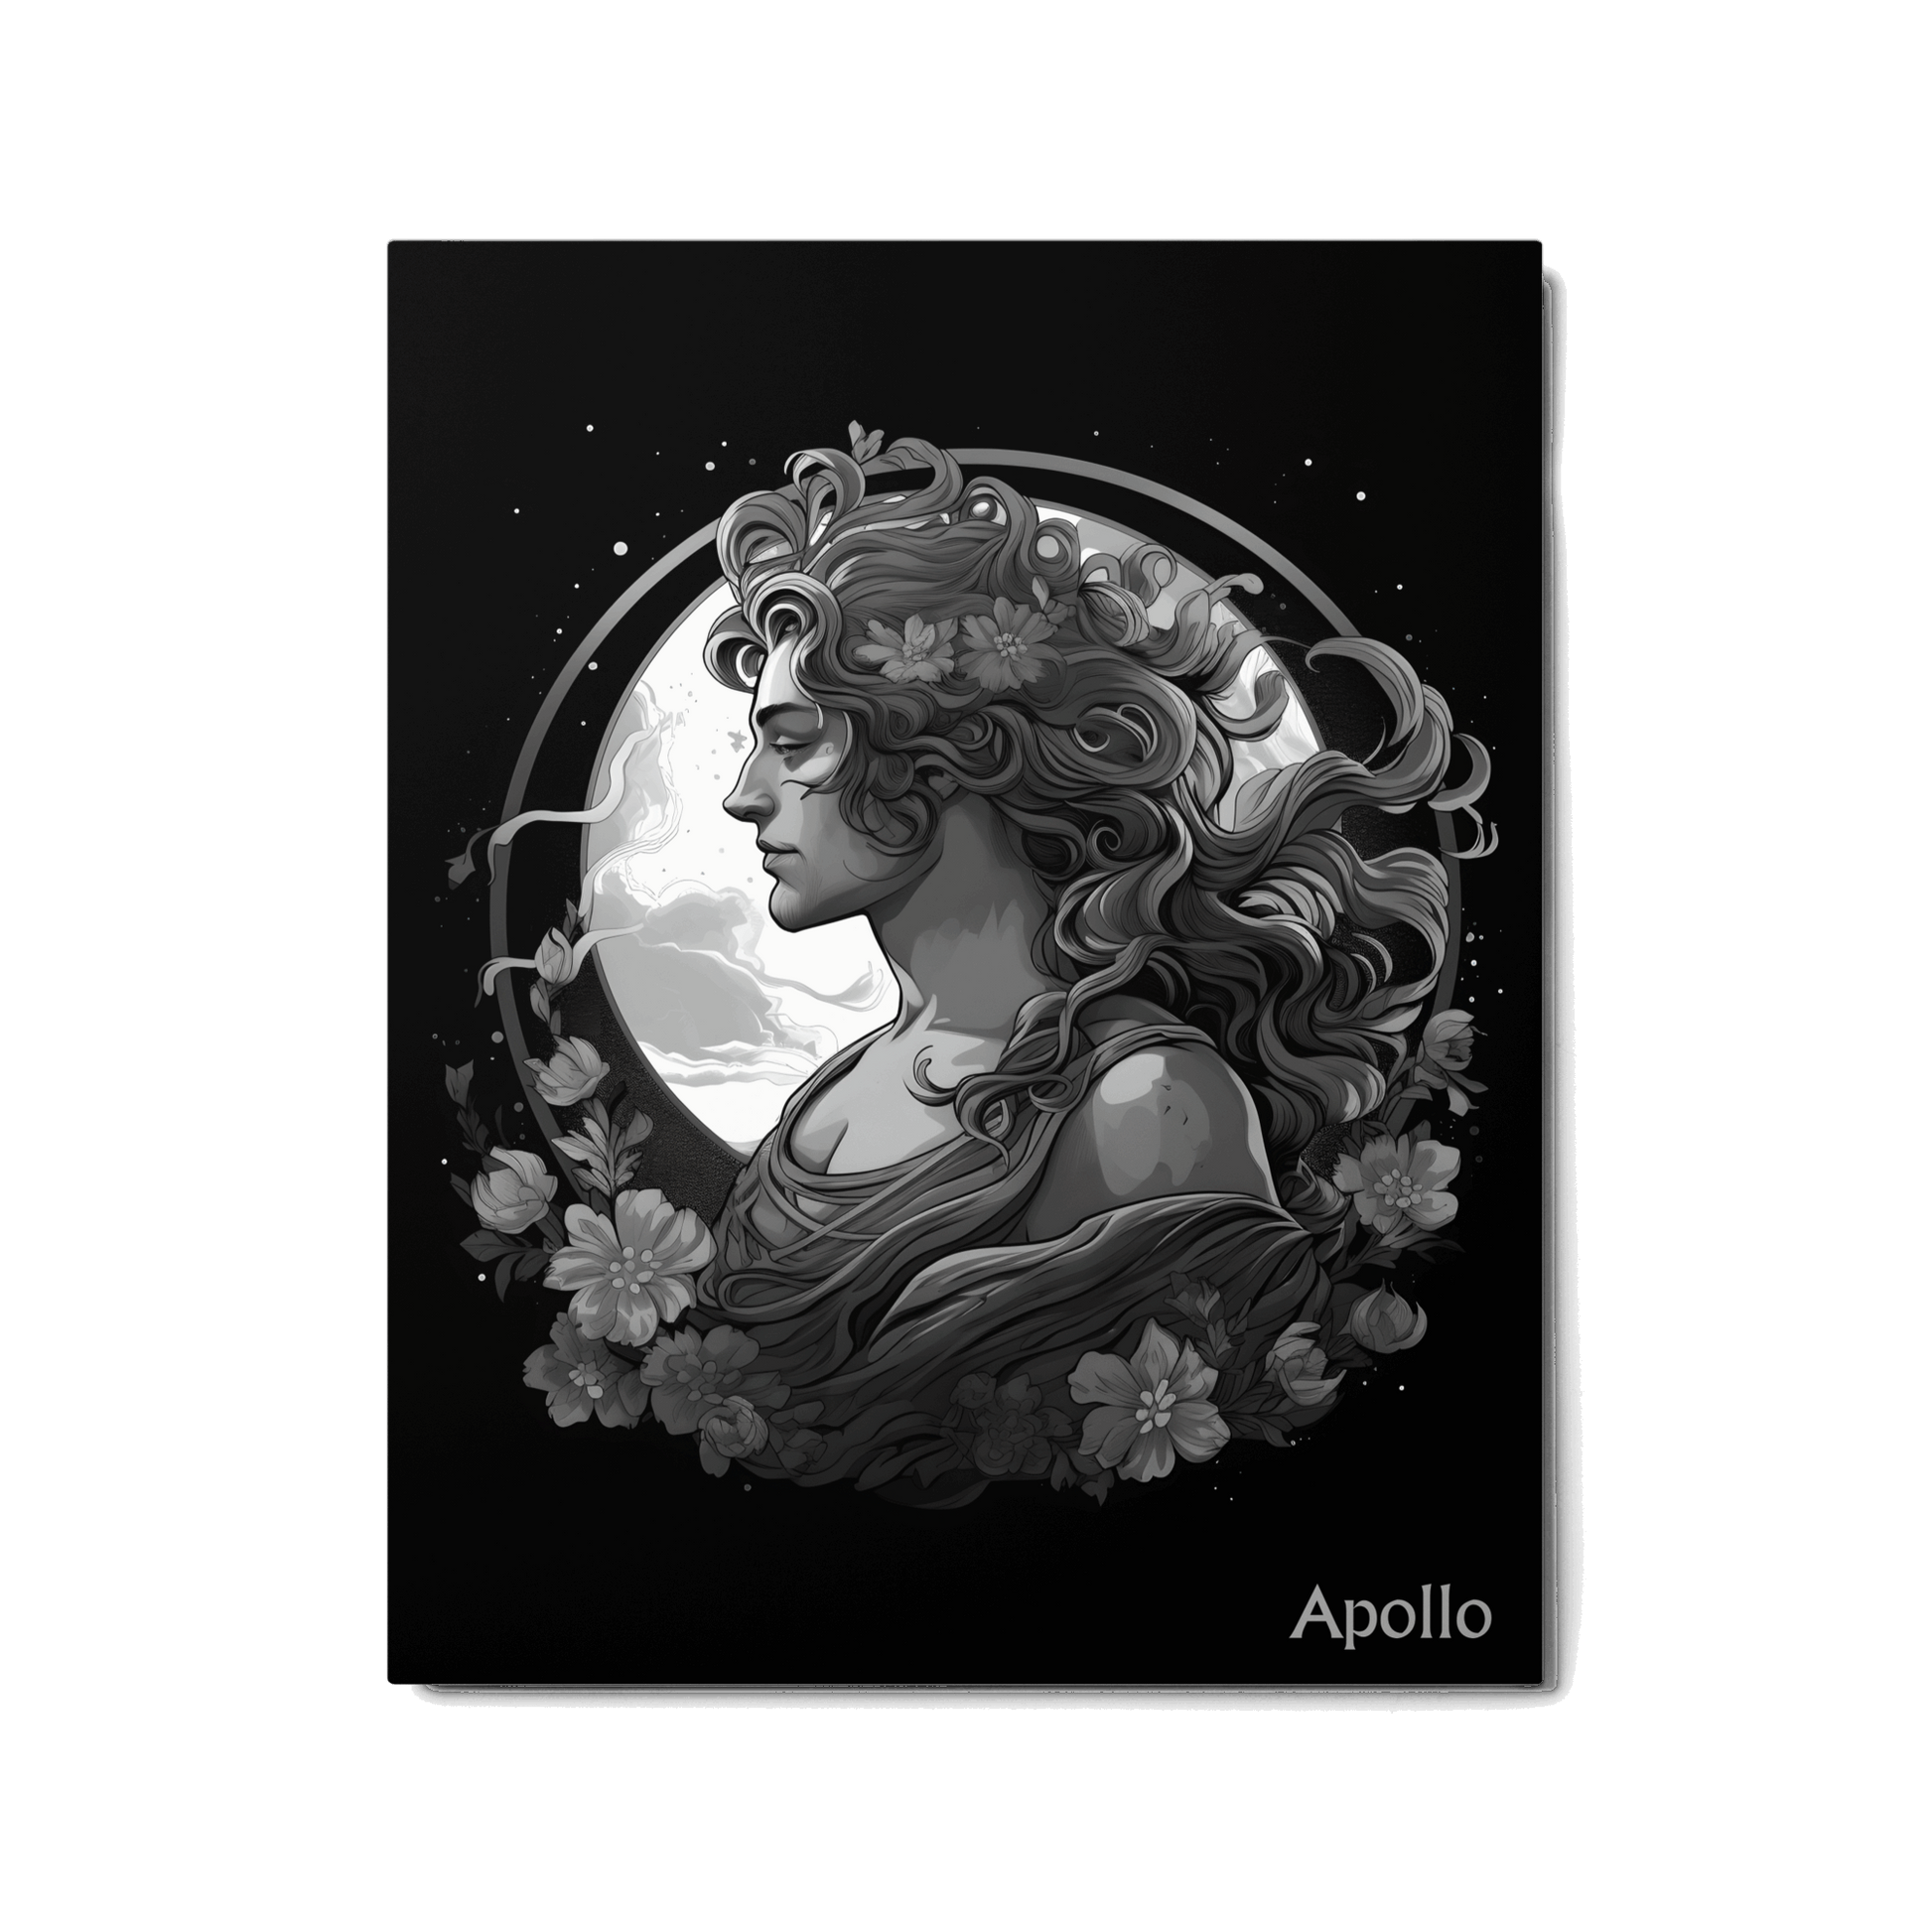 Apollo's Luminance - Black and White Hanging Wall Art High Quality Metal Print DrawDadDraw